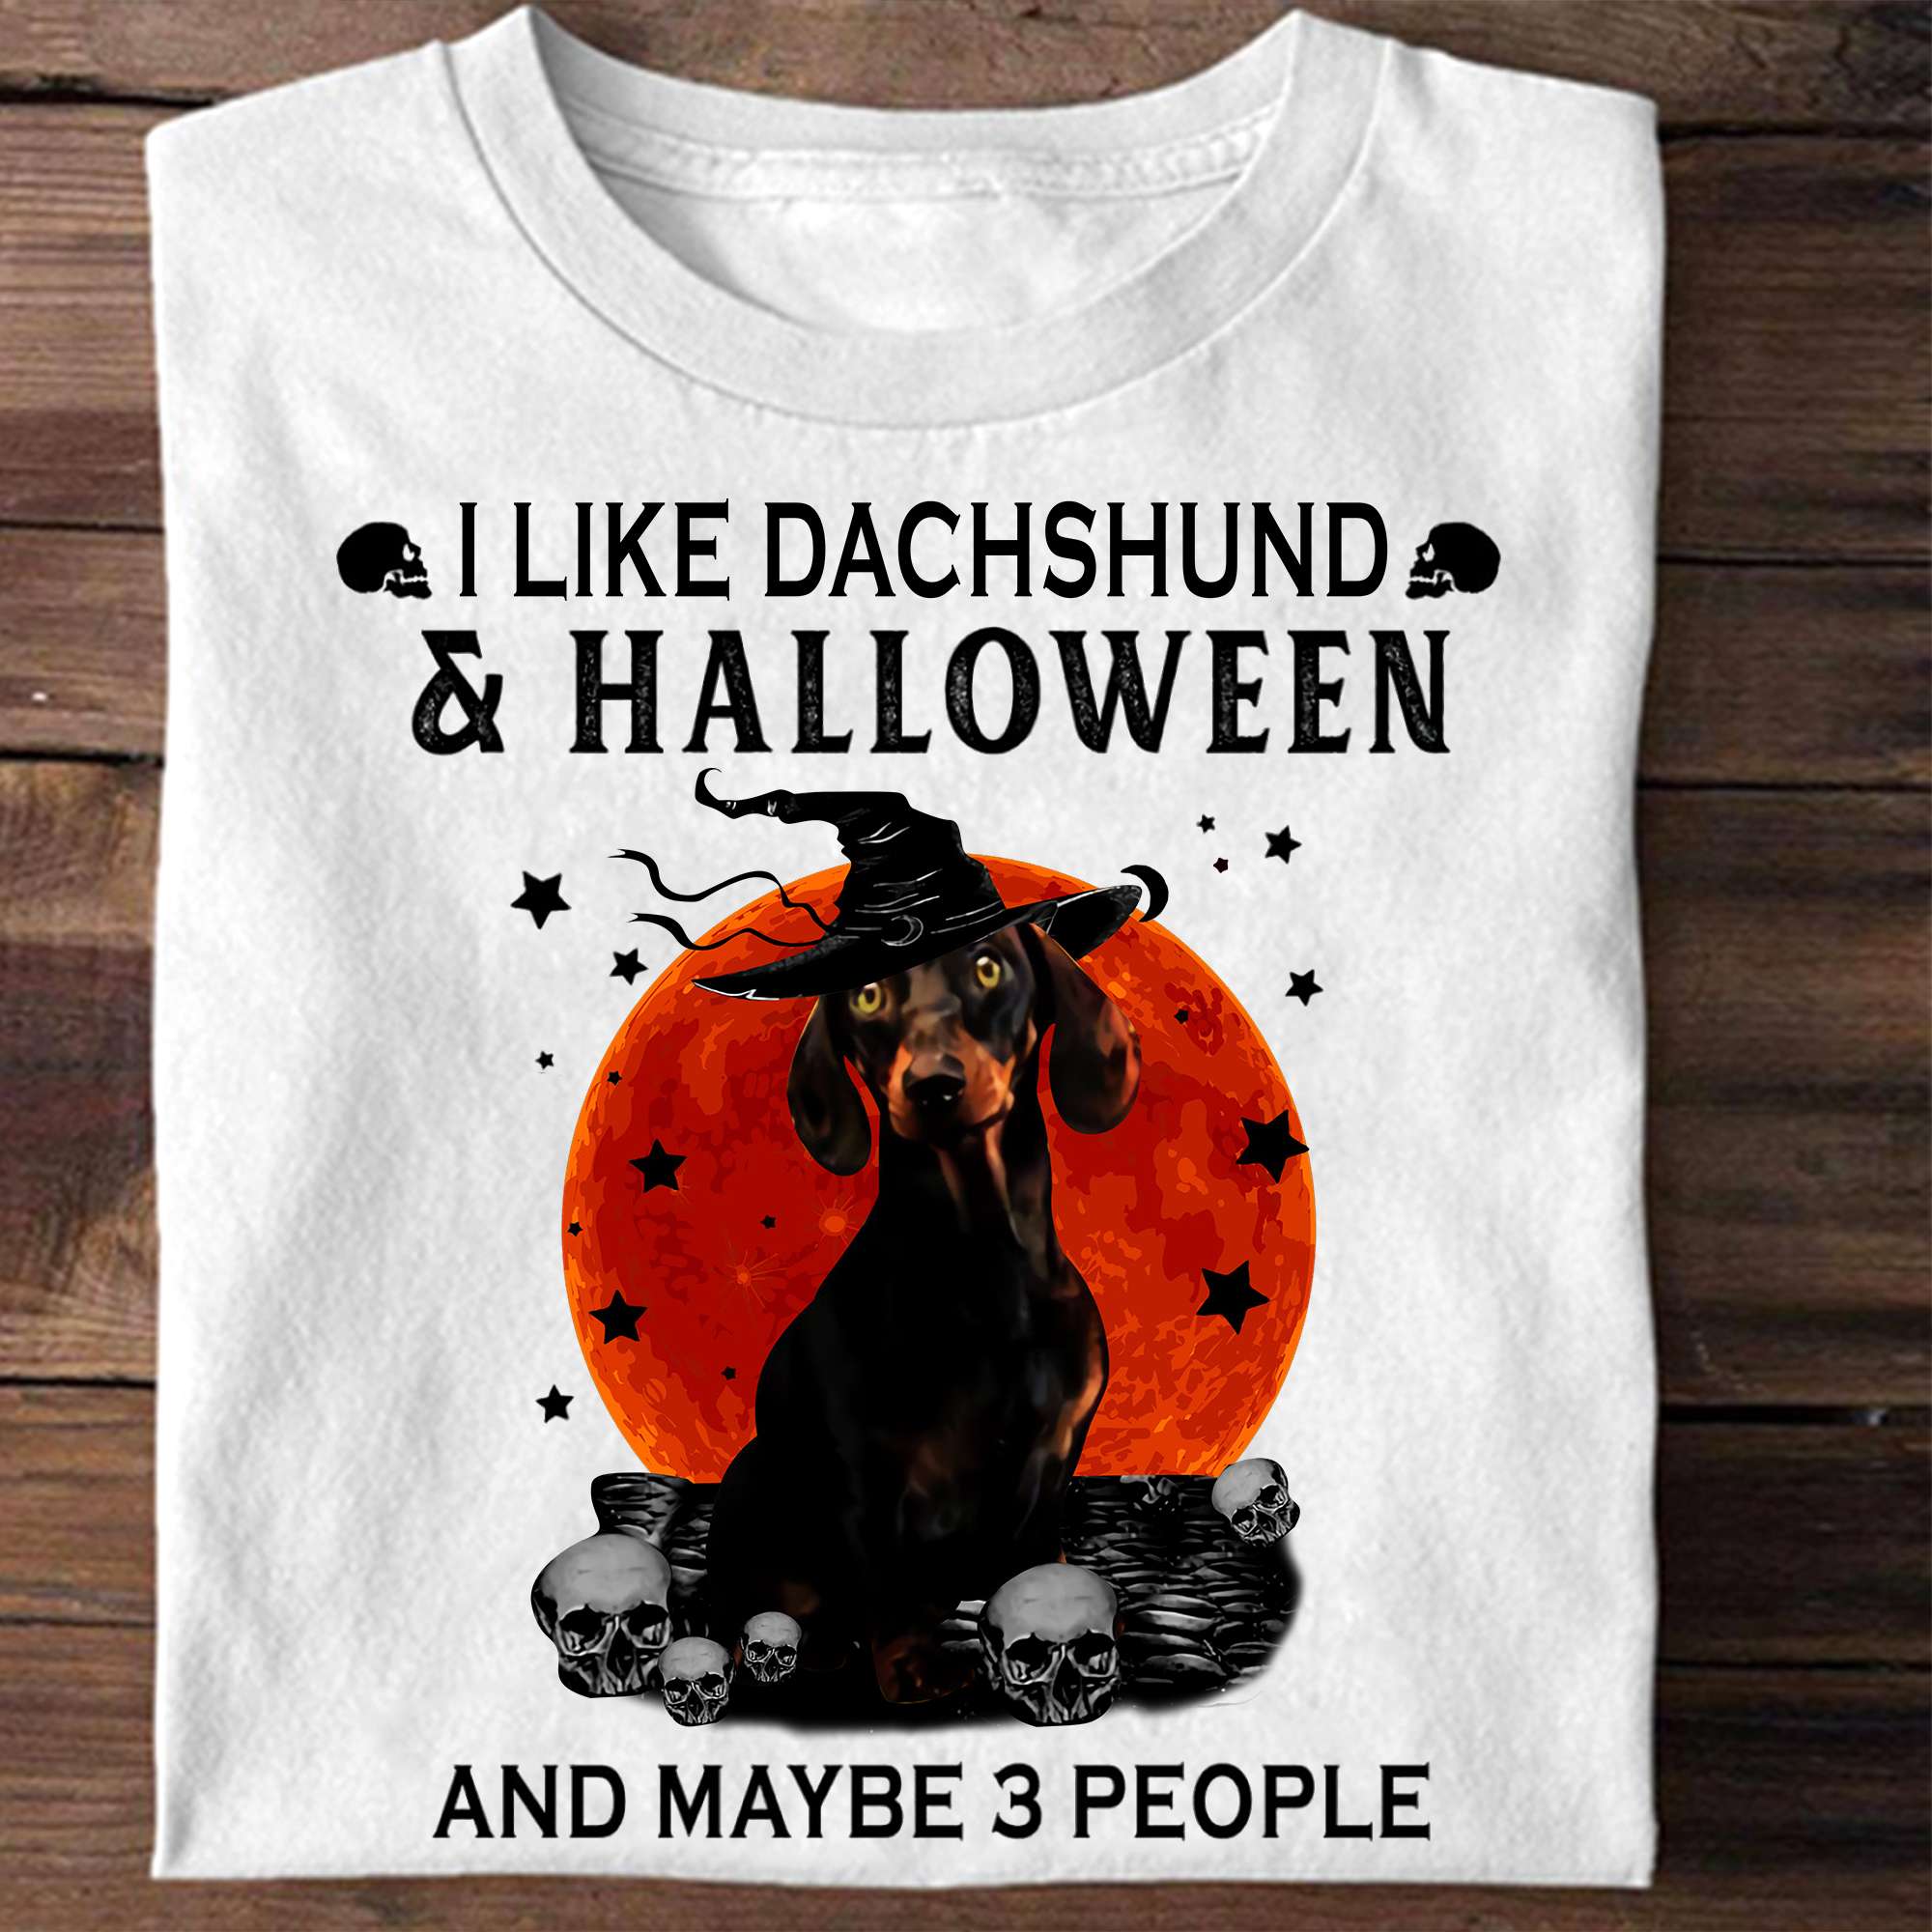 I like Dachshund and Halloween and maybe 3 people - Dachshund witch hat, halloween witch costume